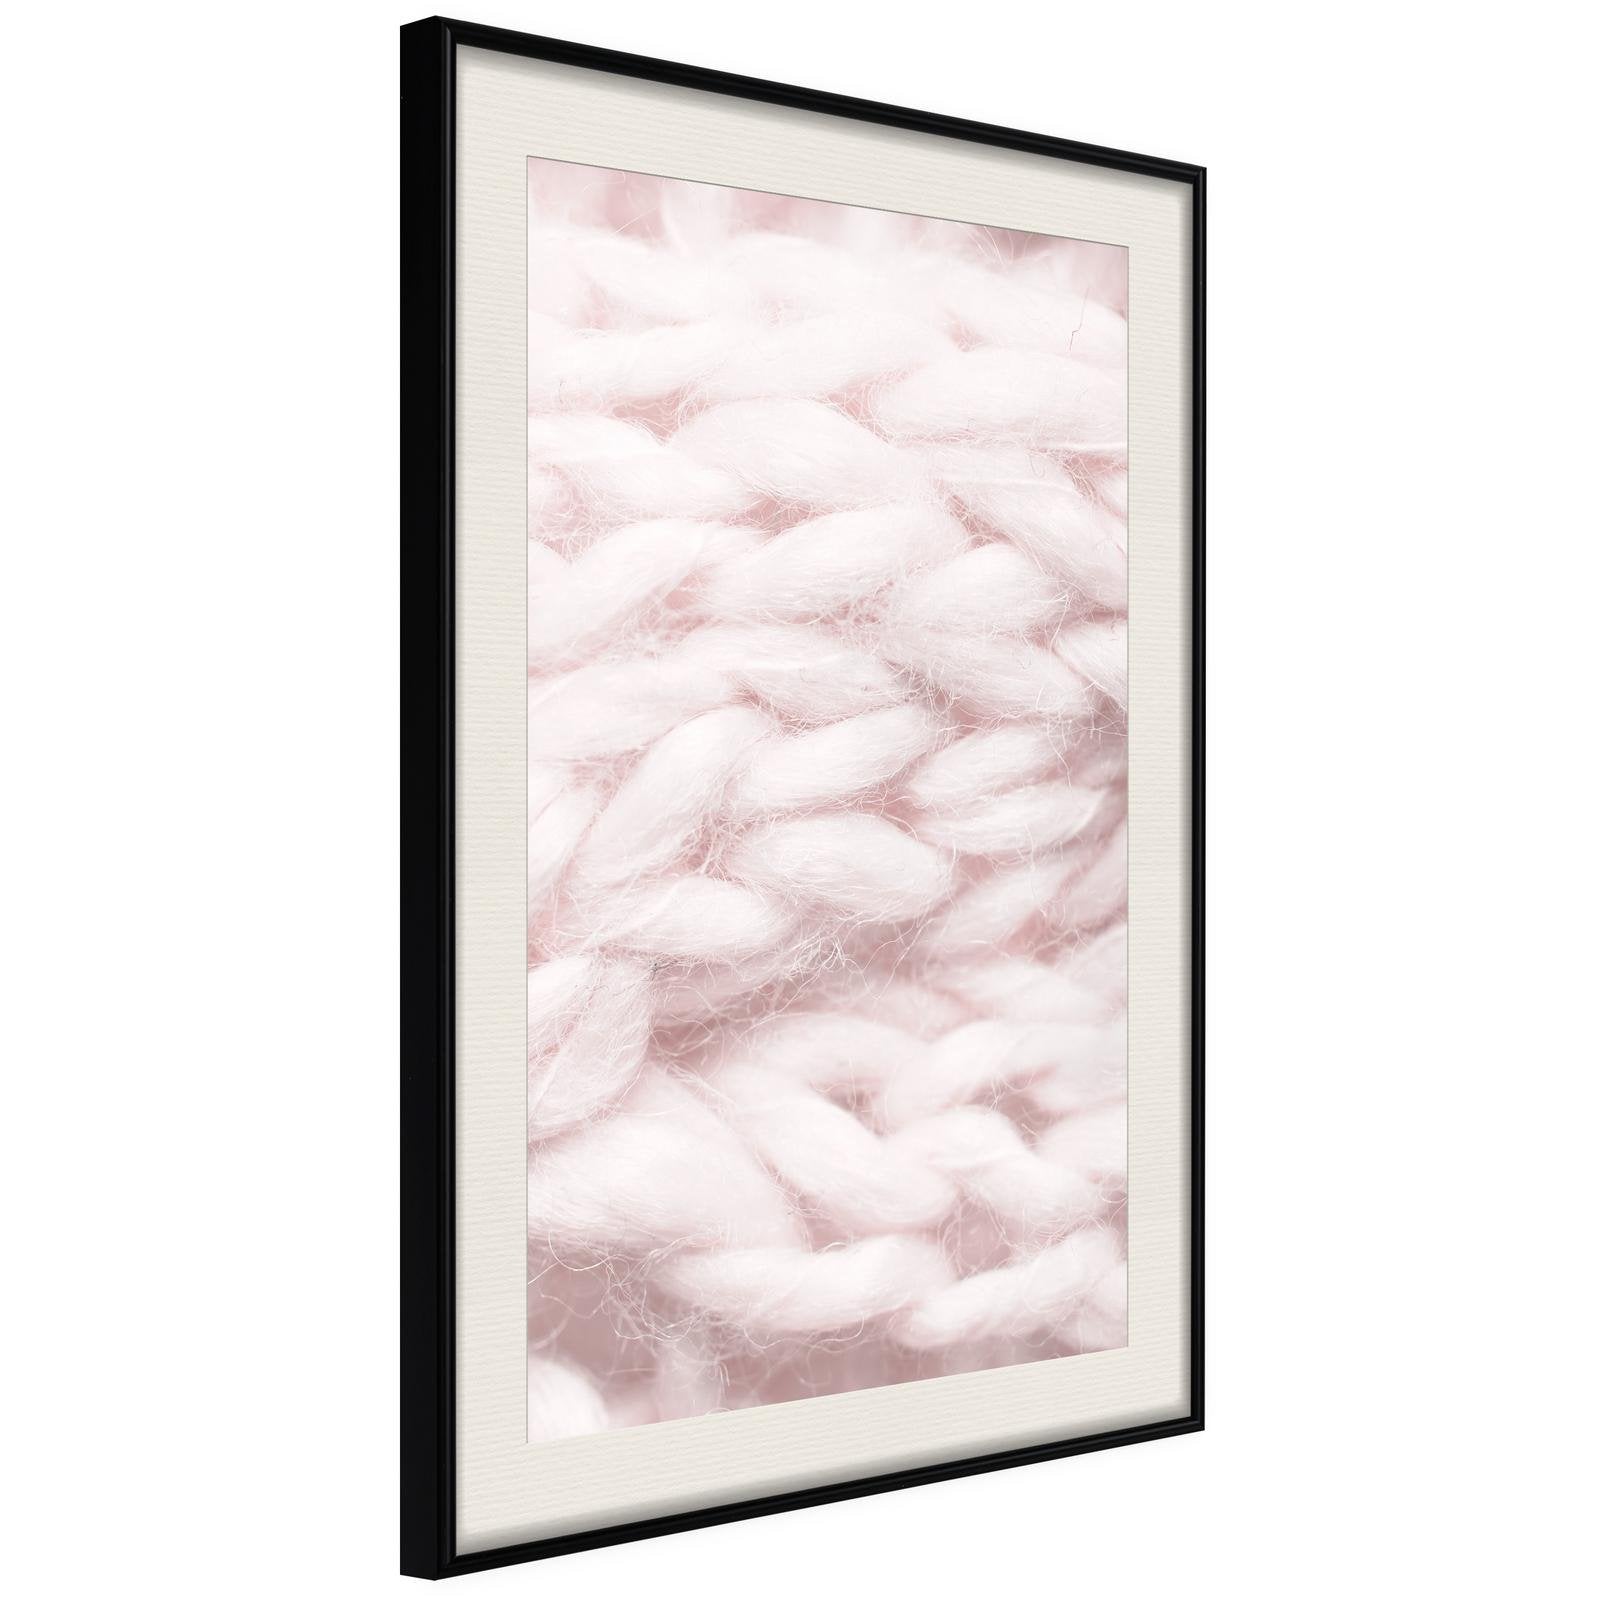 Inramad Poster / Tavla - Pale Pink Knit - 40x60 Svart ram med passepartout